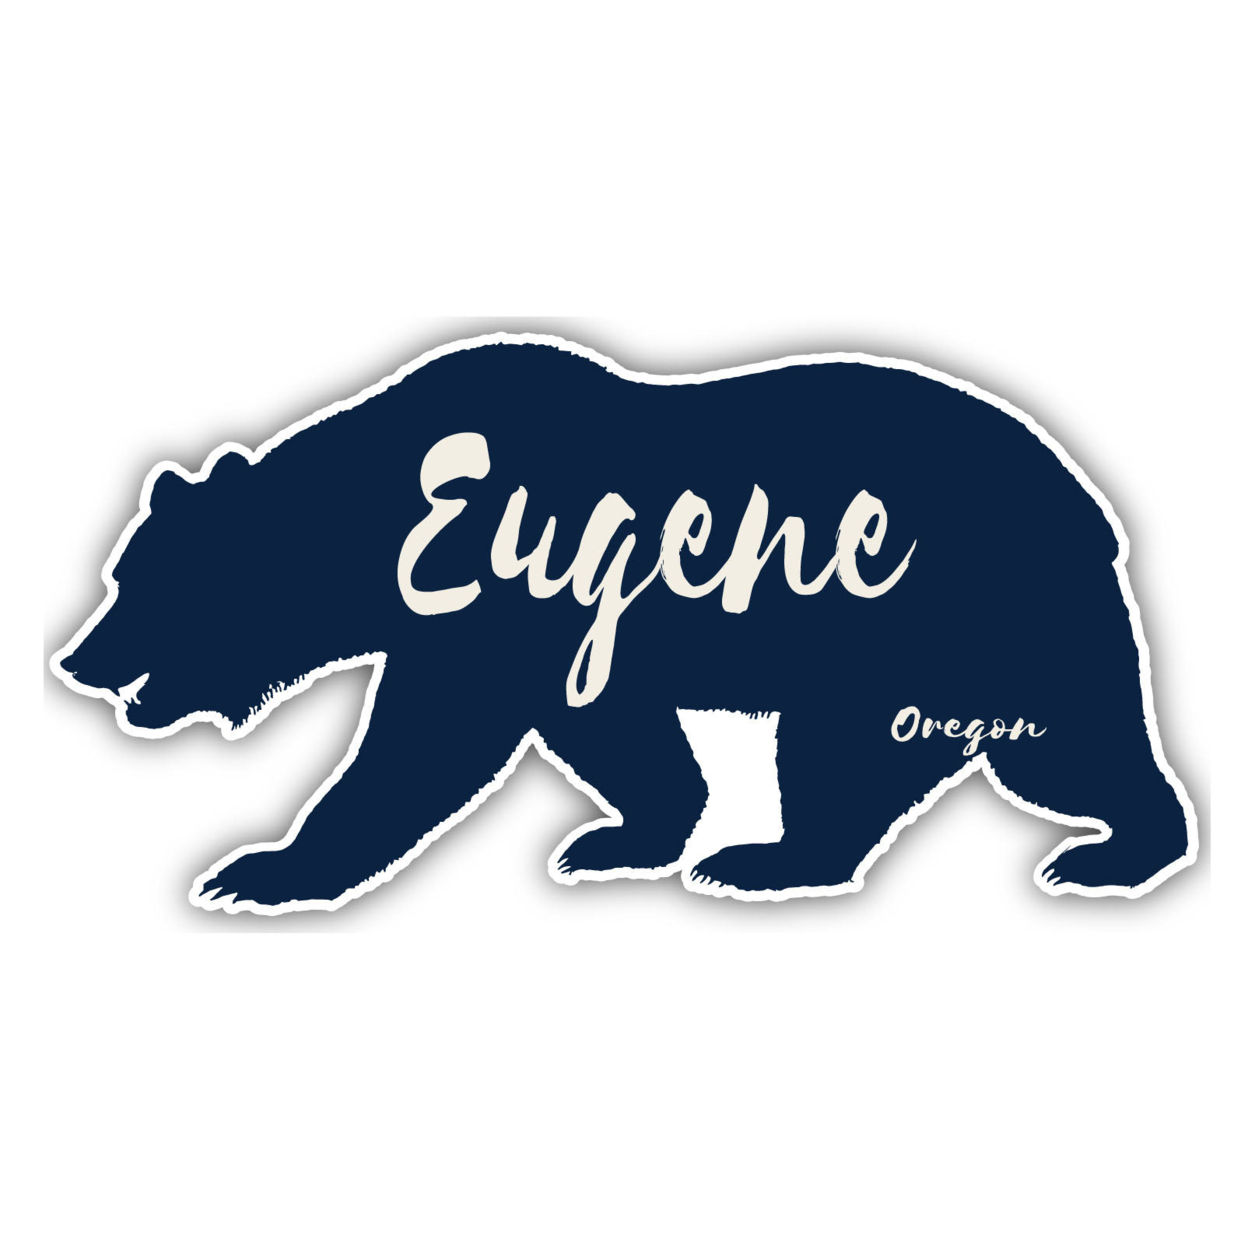 Eugene Oregon Souvenir Decorative Stickers (Choose Theme And Size) - Single Unit, 2-Inch, Bear